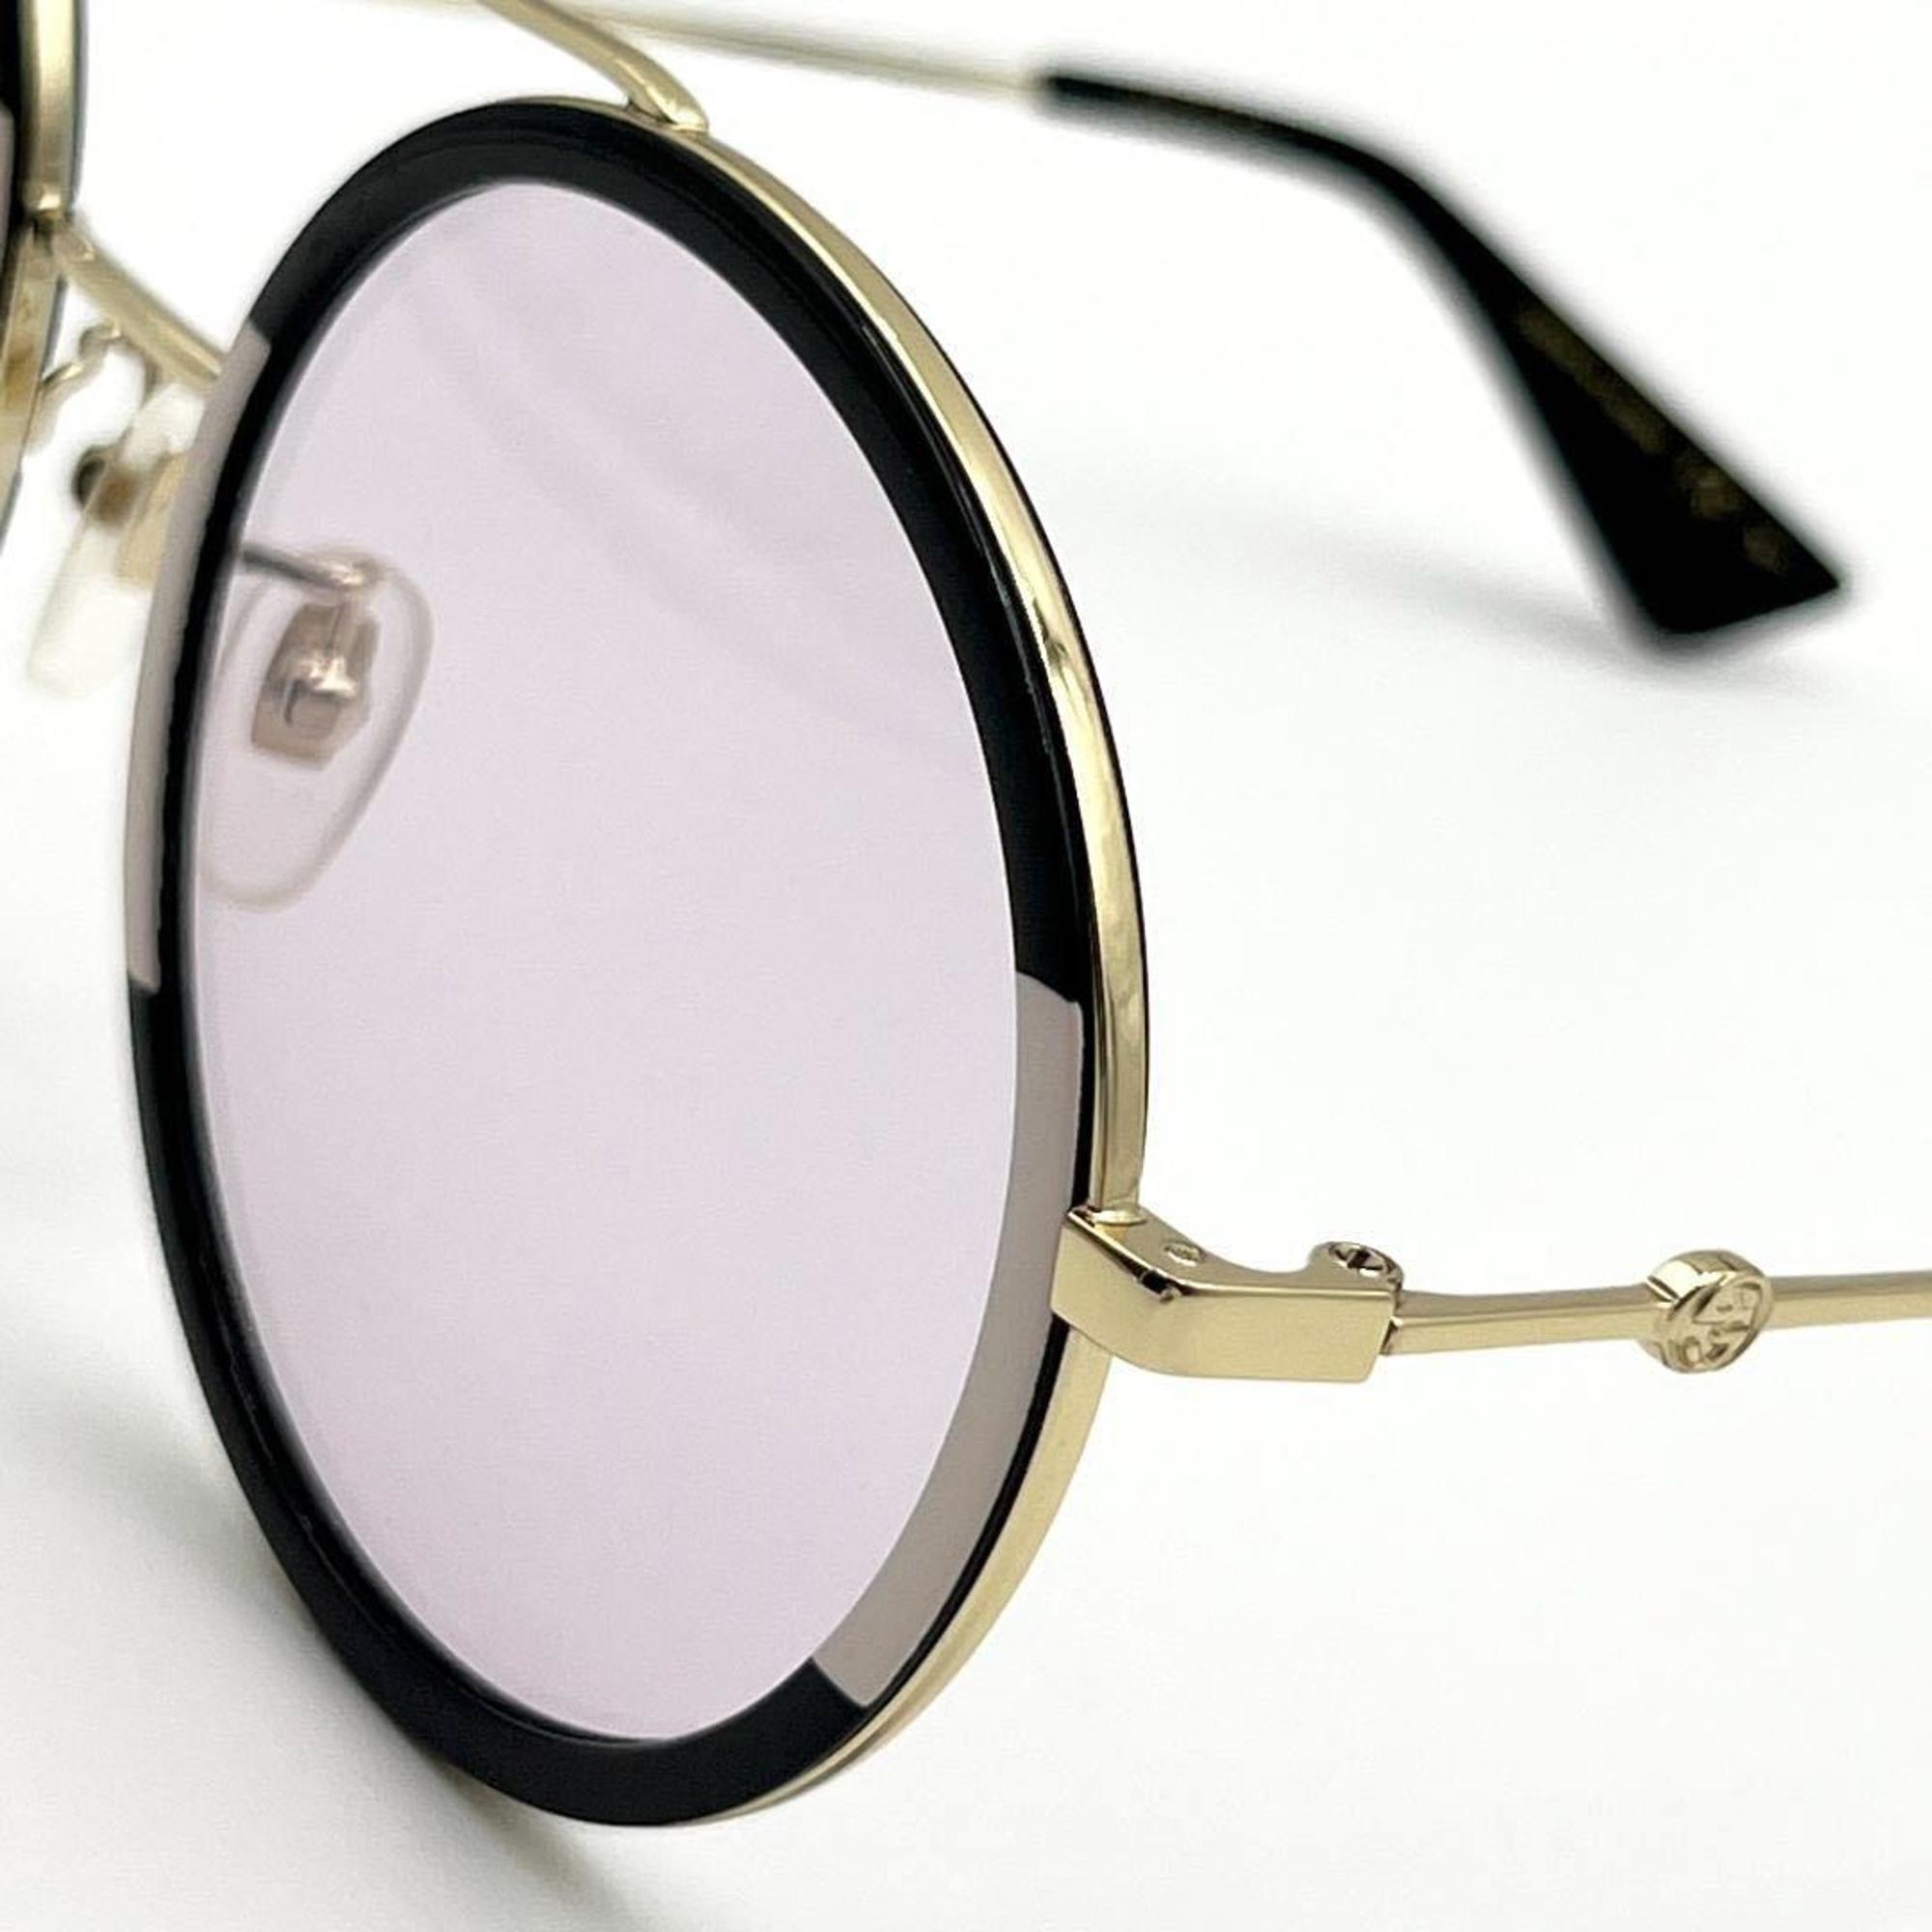 GUCCI Women's Sunglasses, Glasses, Eyeglasses, Bee GG0061S